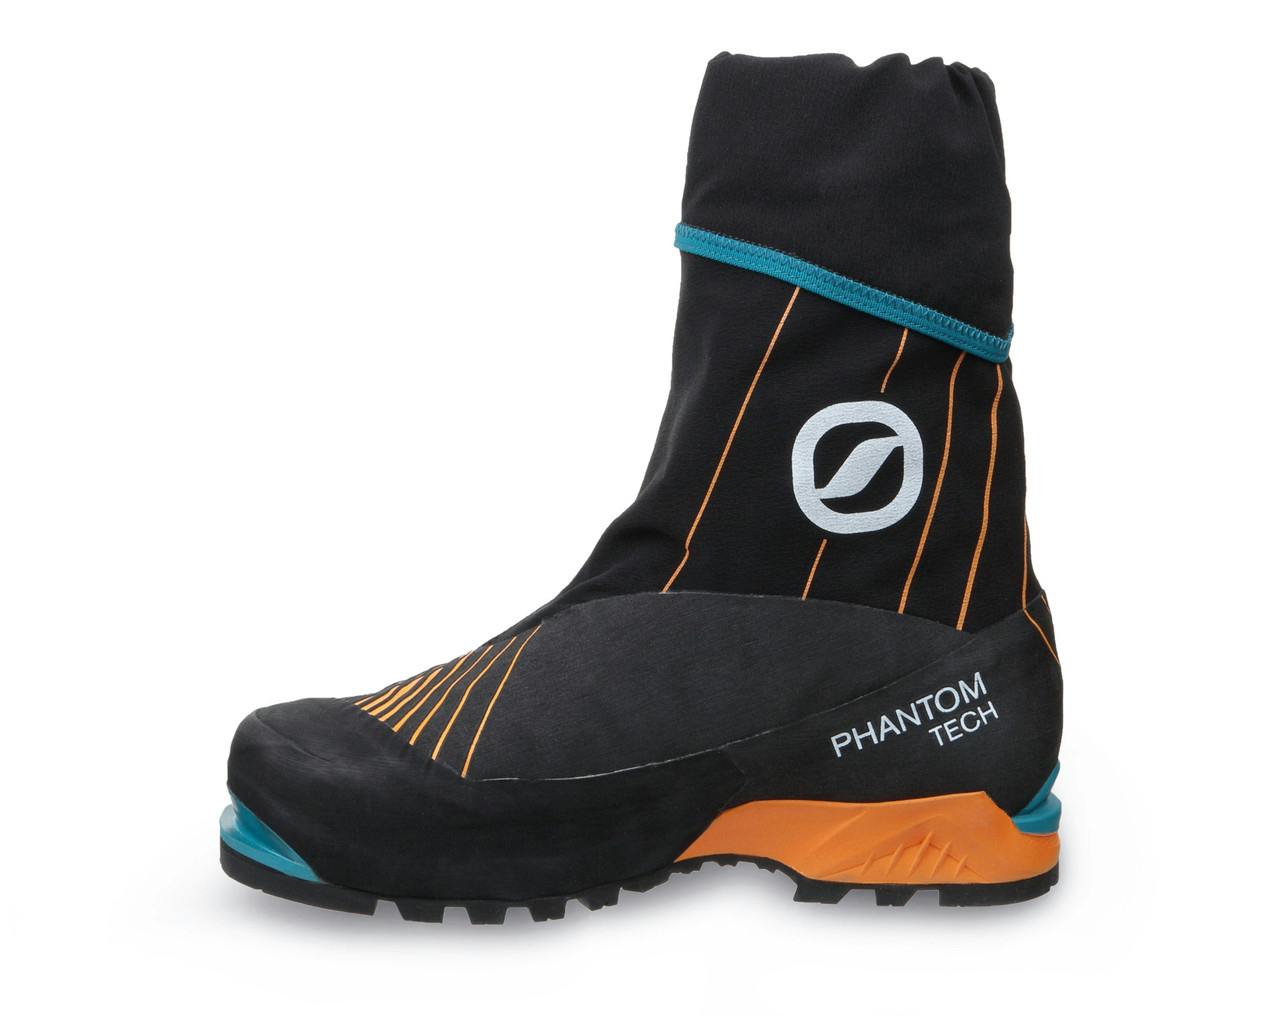 Phantom Tech Mountaineering Boots Black/Orange